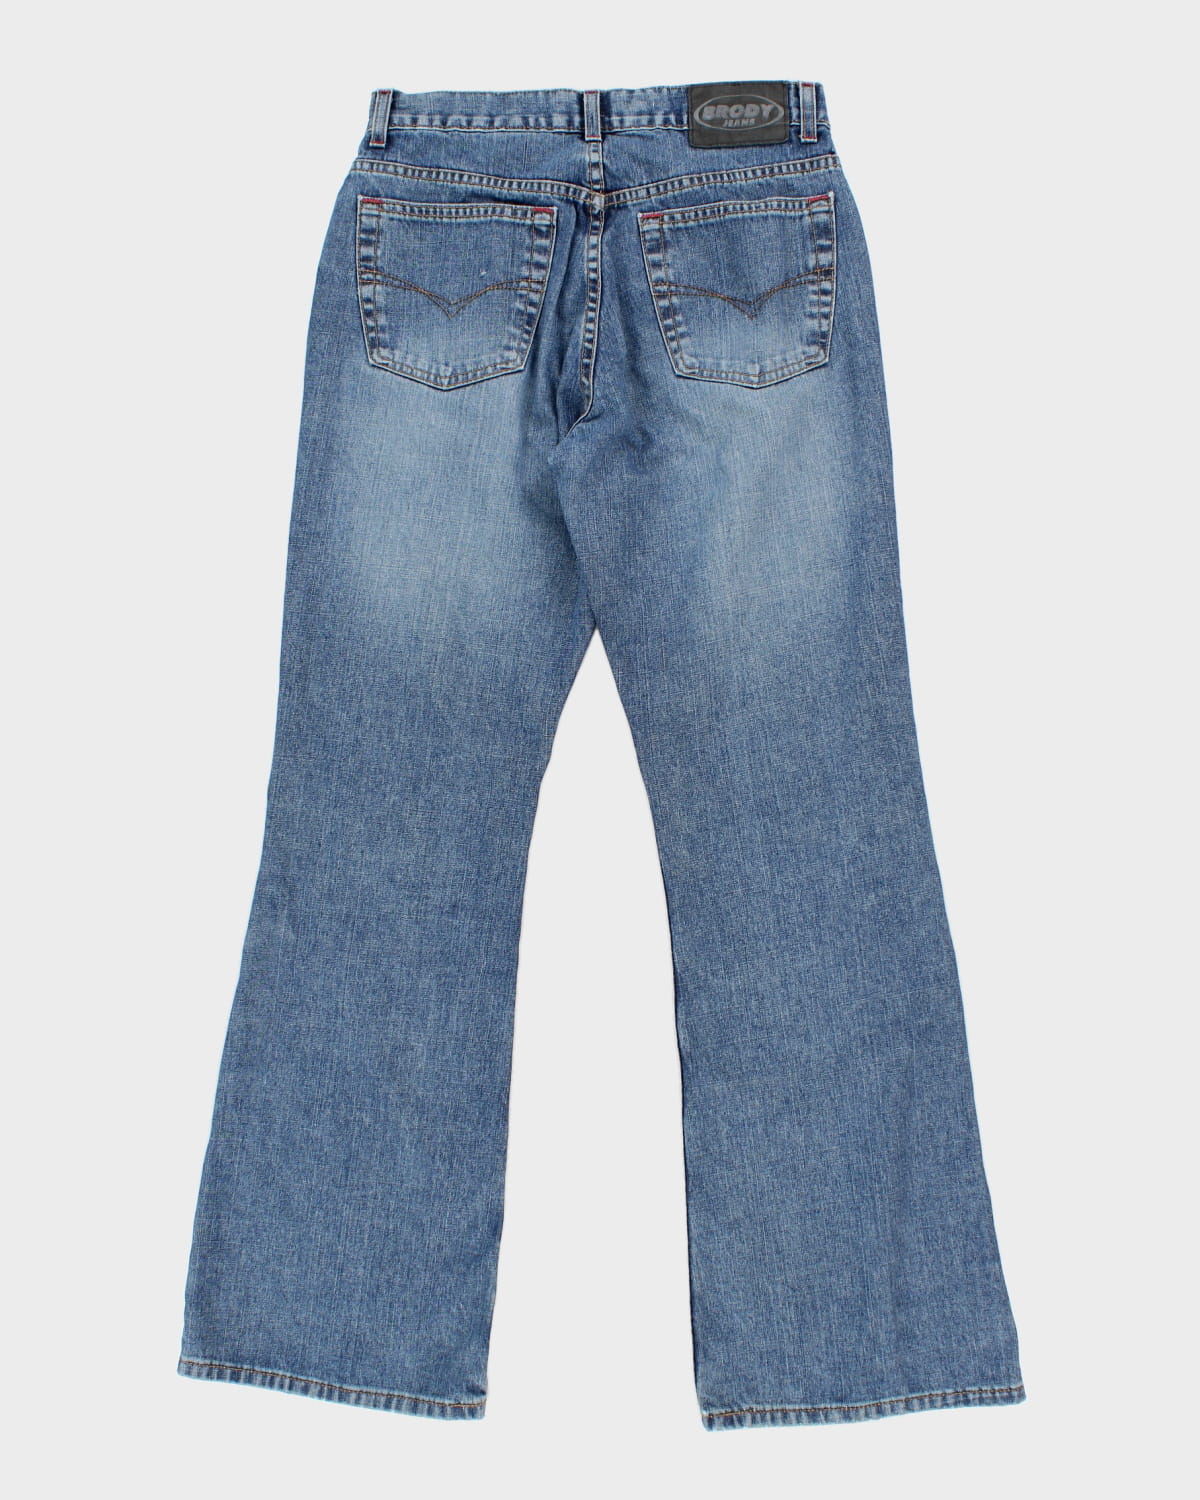 Vintage 90s Brody Light Wash Jeans - W30 L32